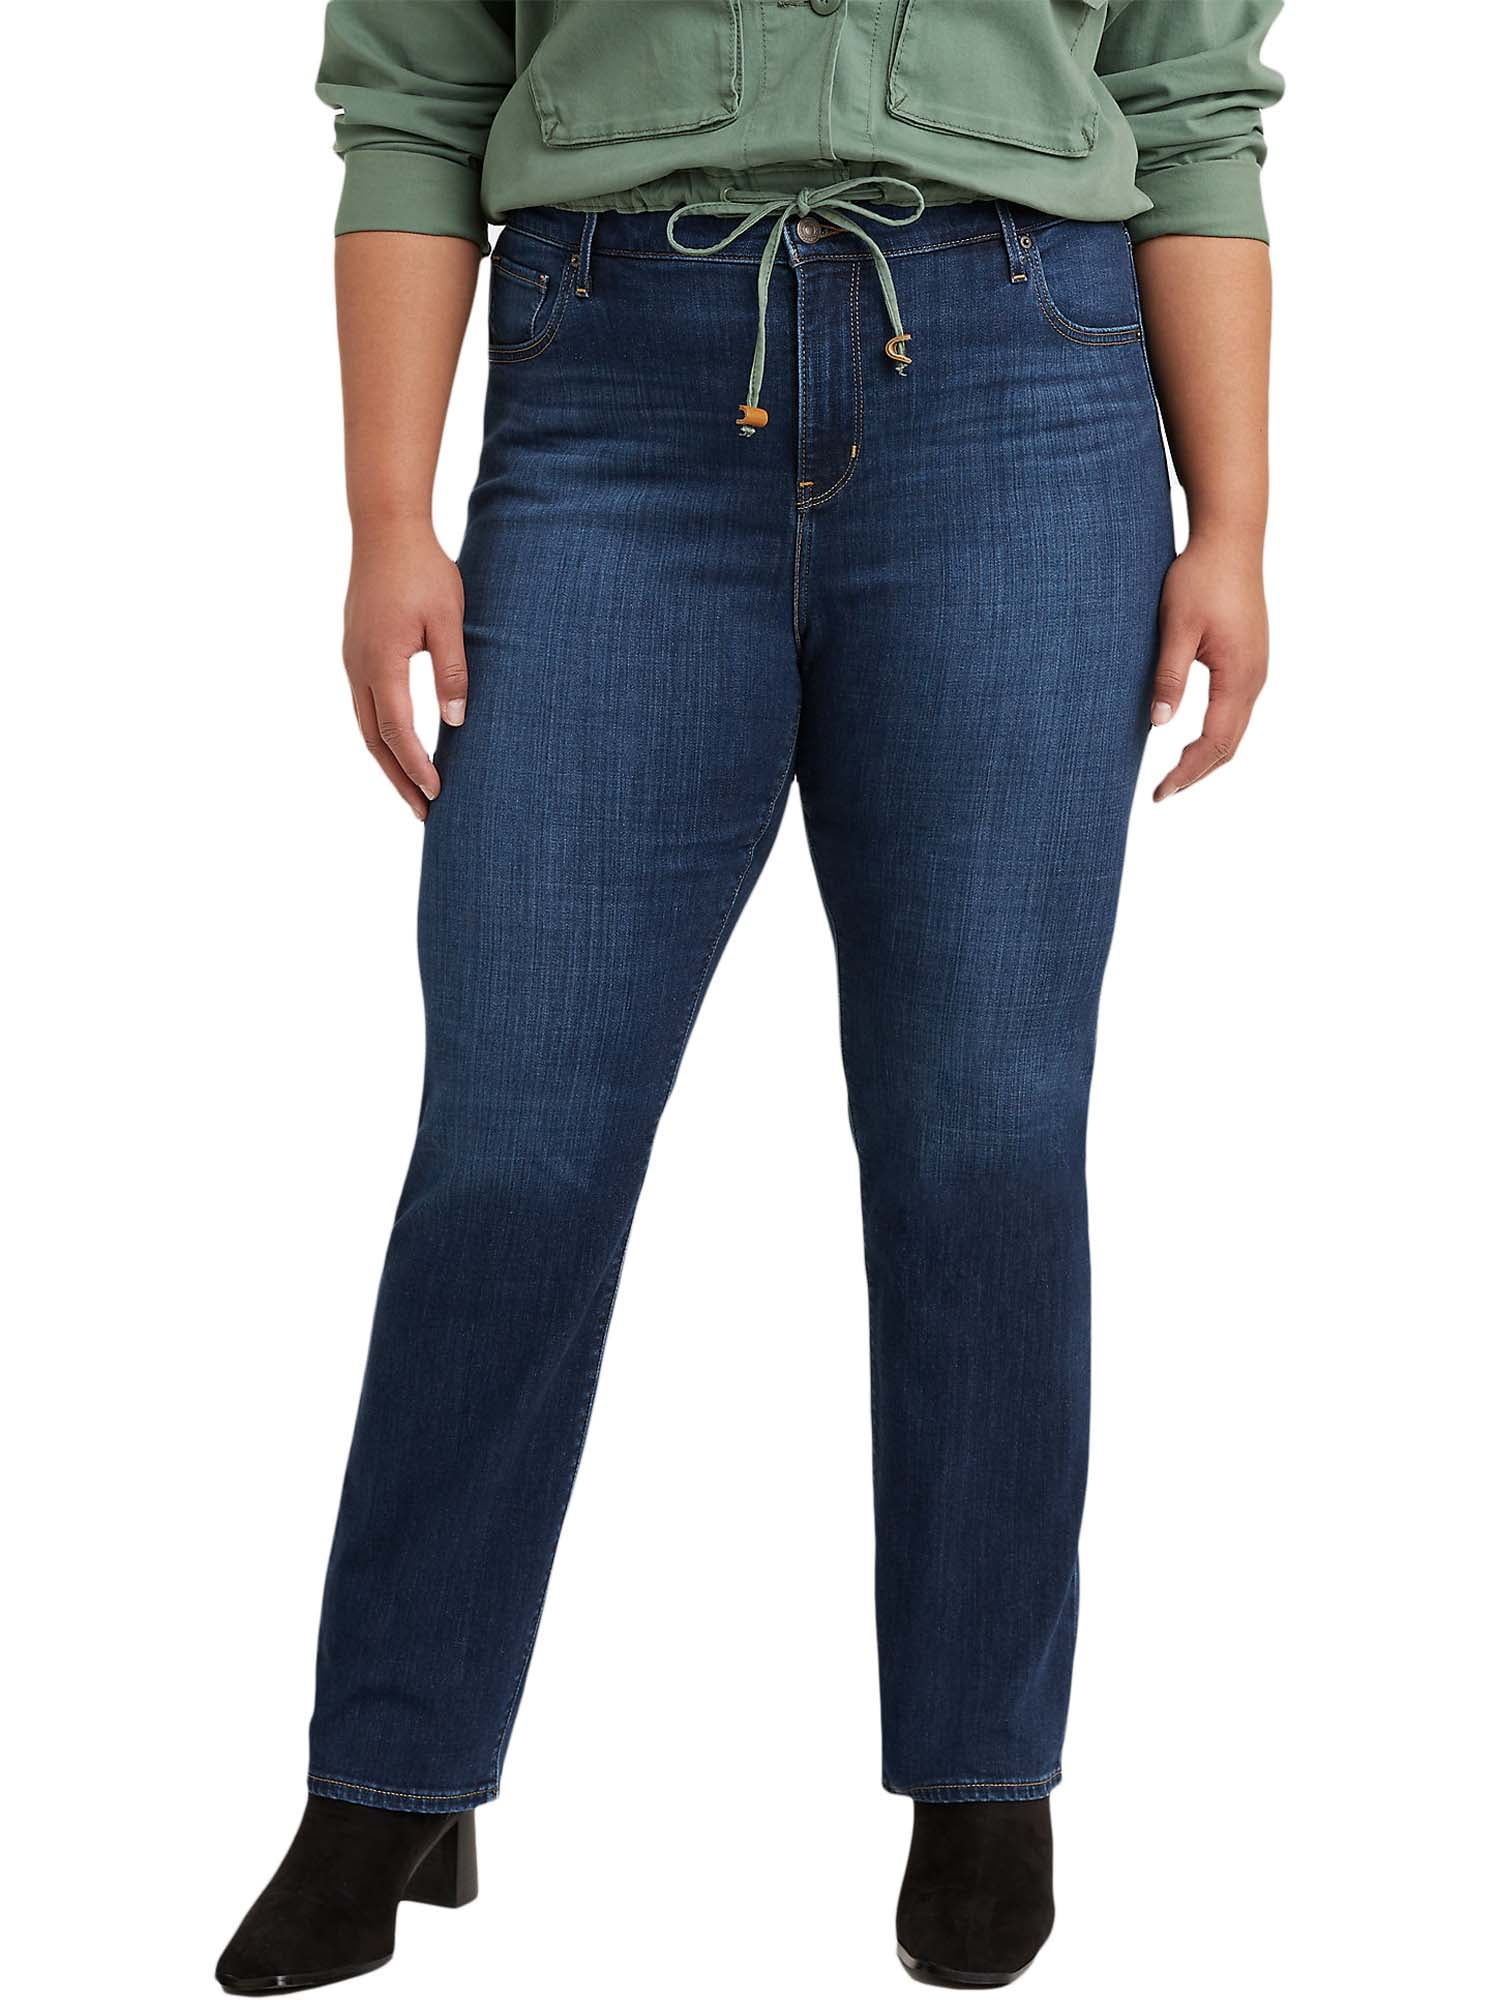 Levi's Women's Plus Size 724 High-Rise Straight Jeans 